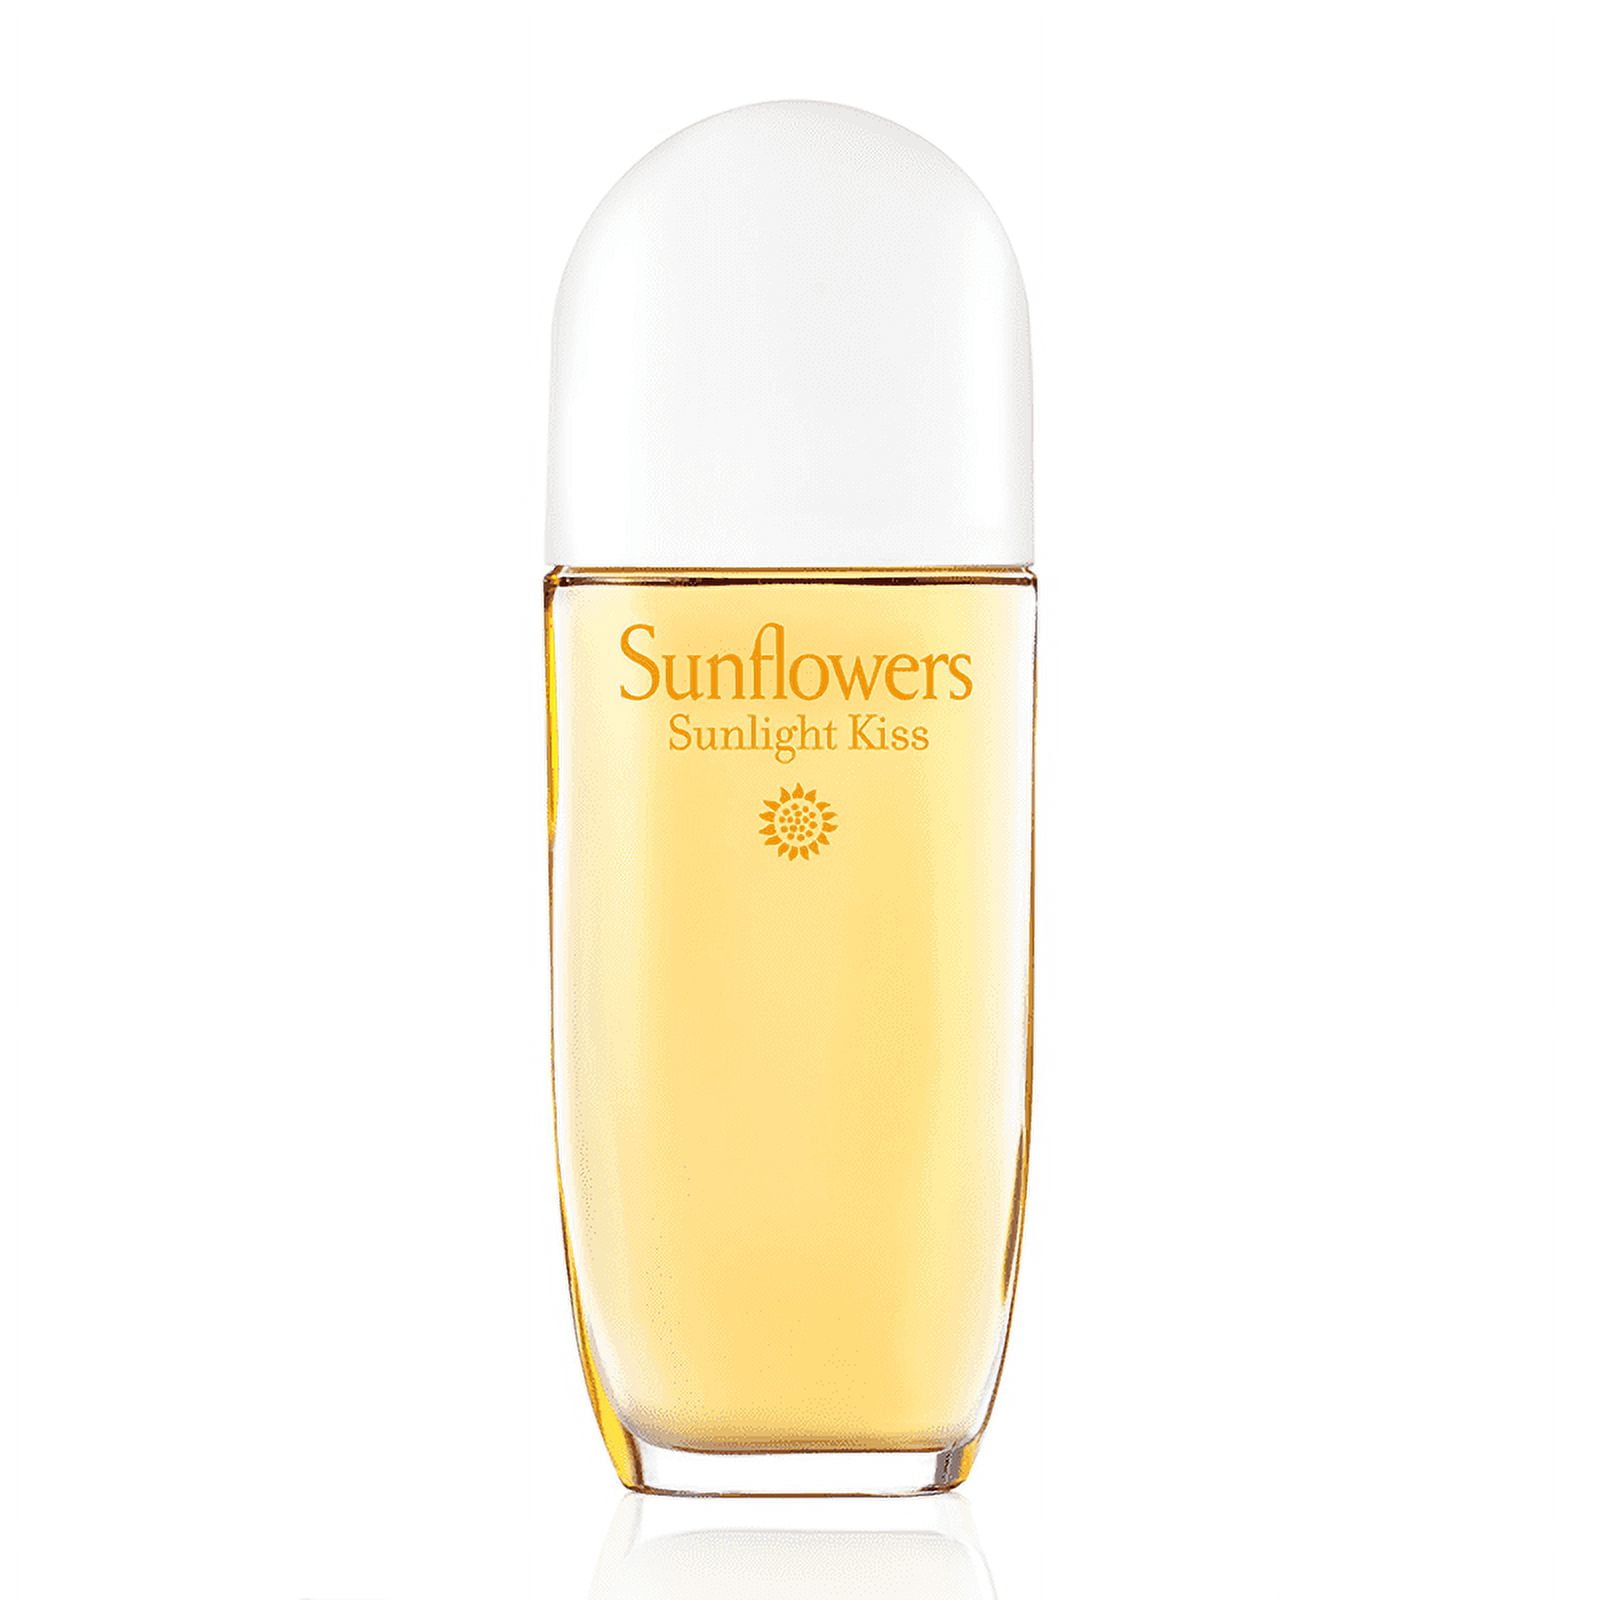 Elizabeth Arden Sunflowers Eau de toilette Perfume For Women 3.3 oz